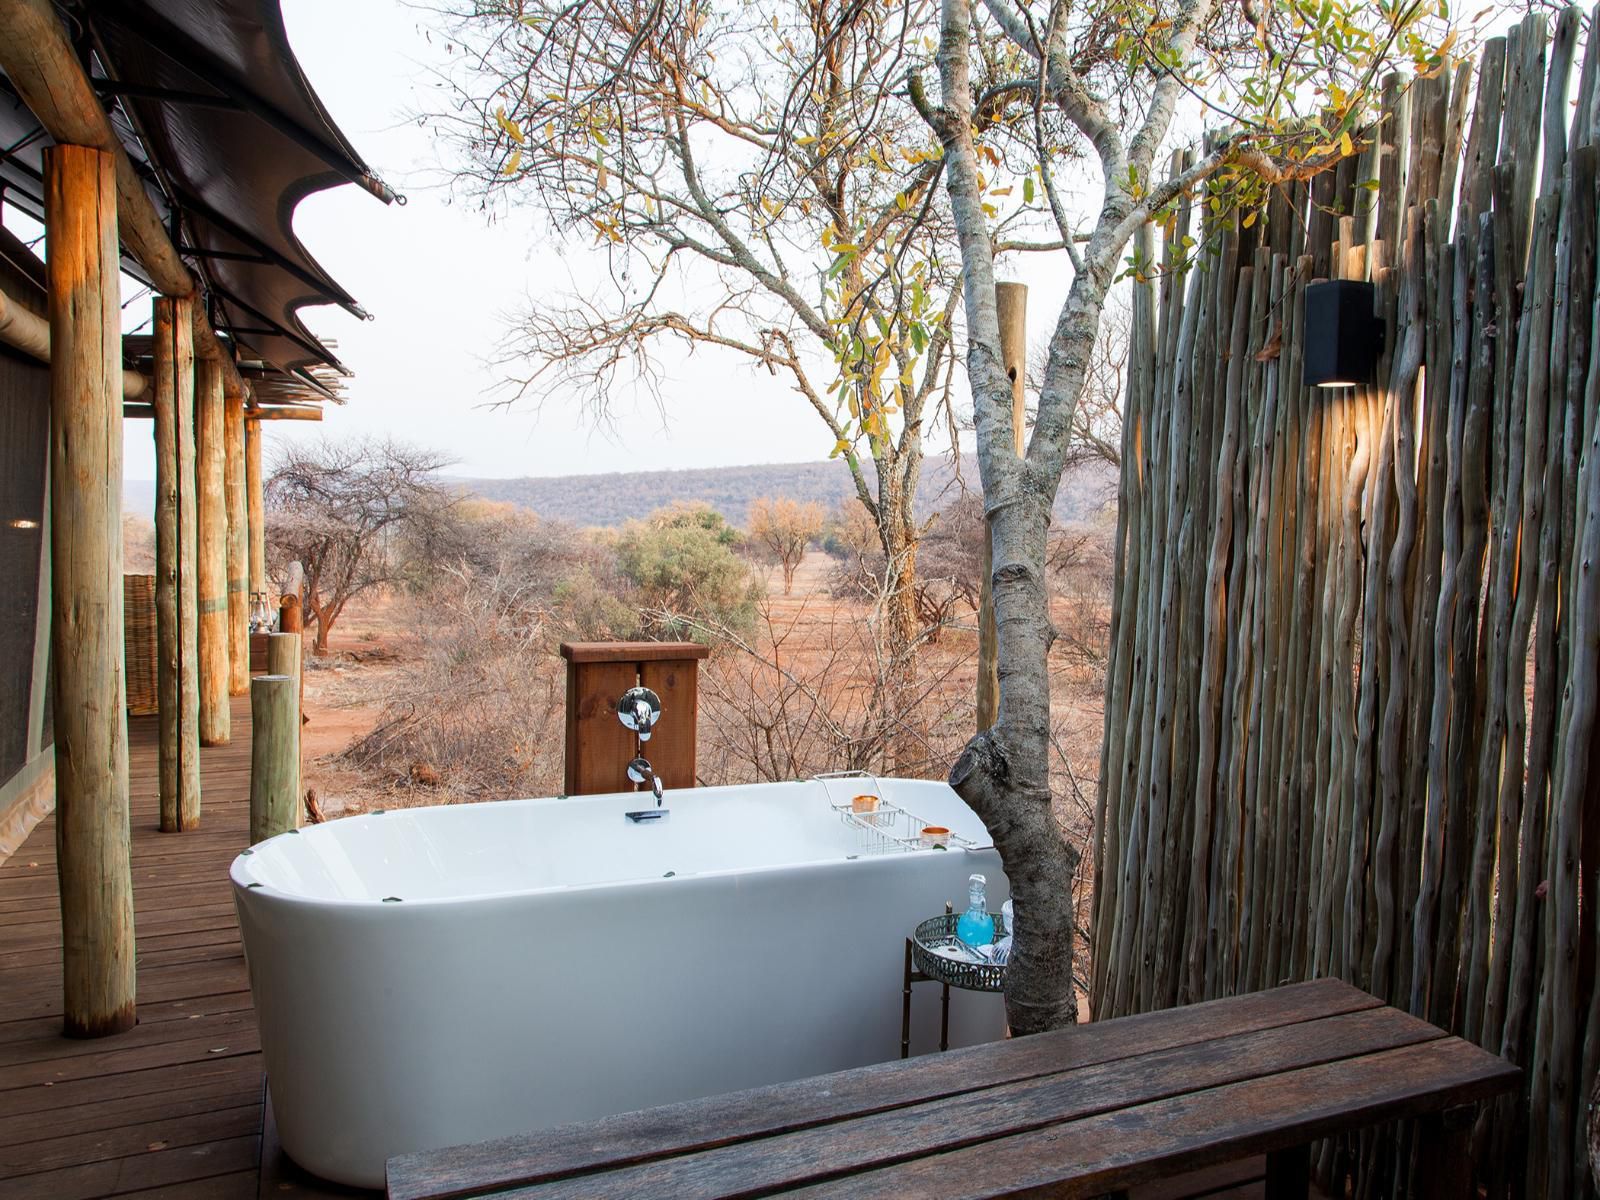 Tintswalo Lapalala Waterberg Limpopo Province South Africa Bathroom